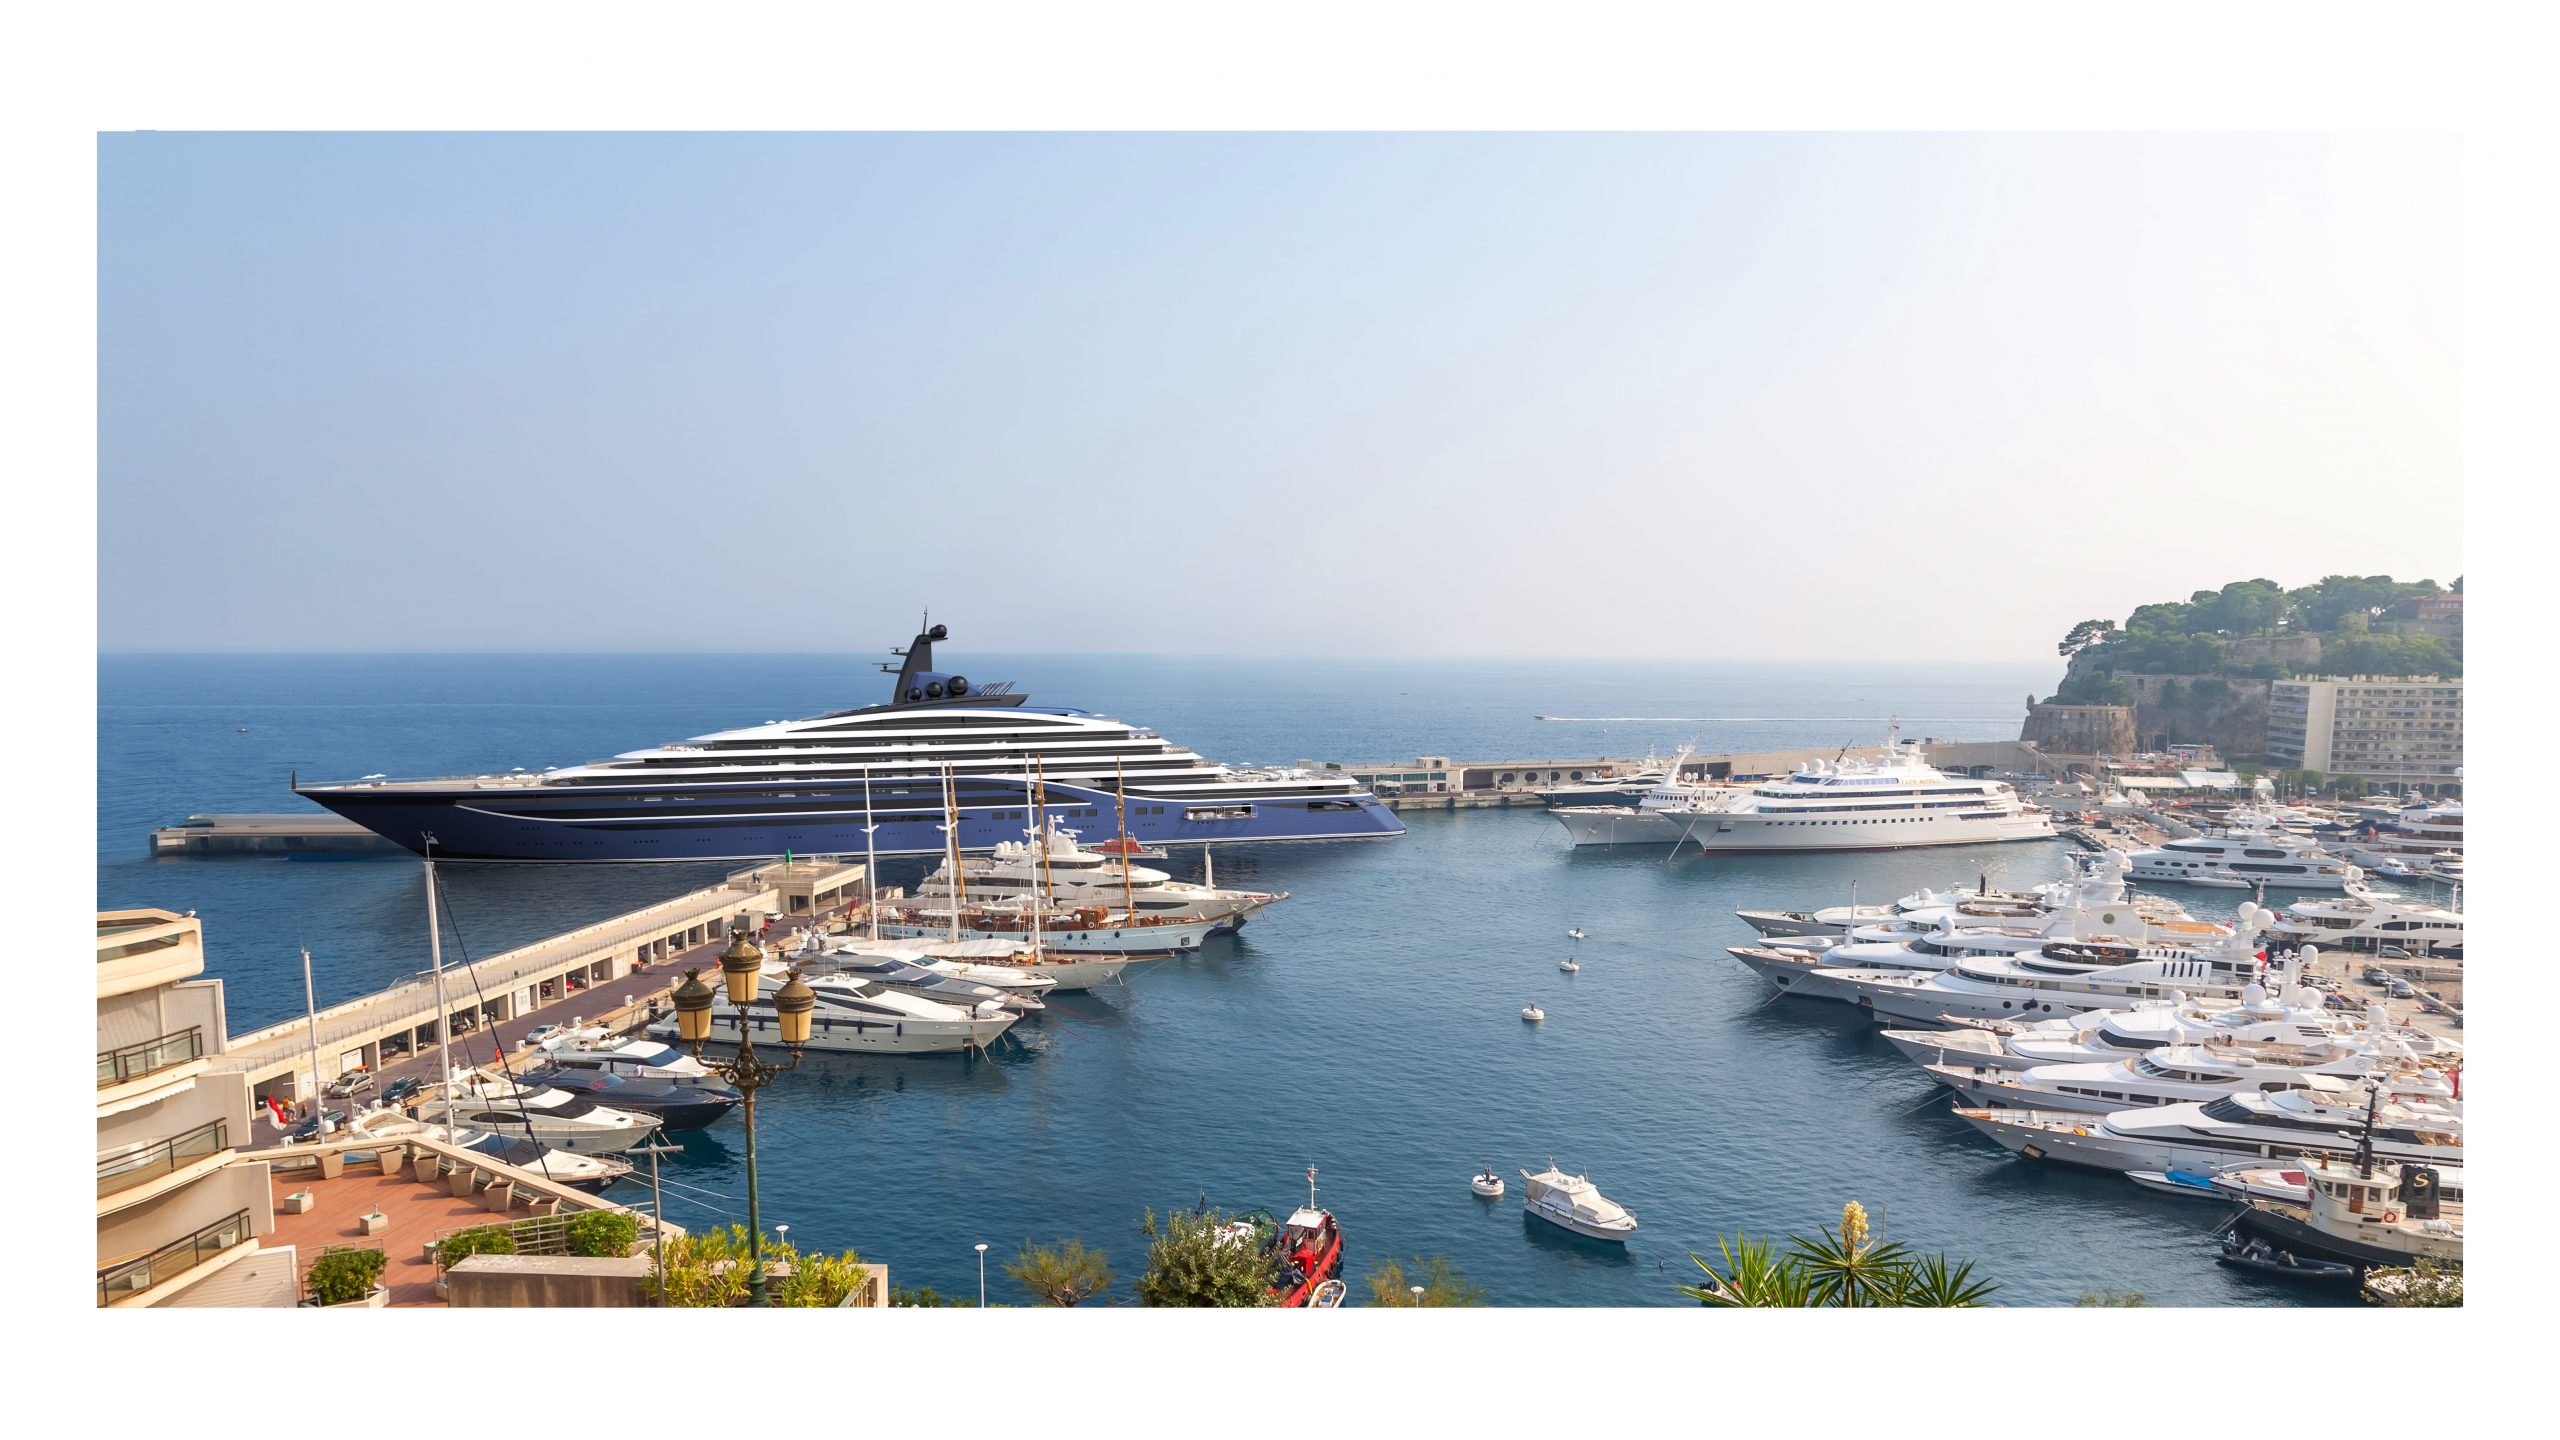 Somnio Superyacht in Monaco Harbor